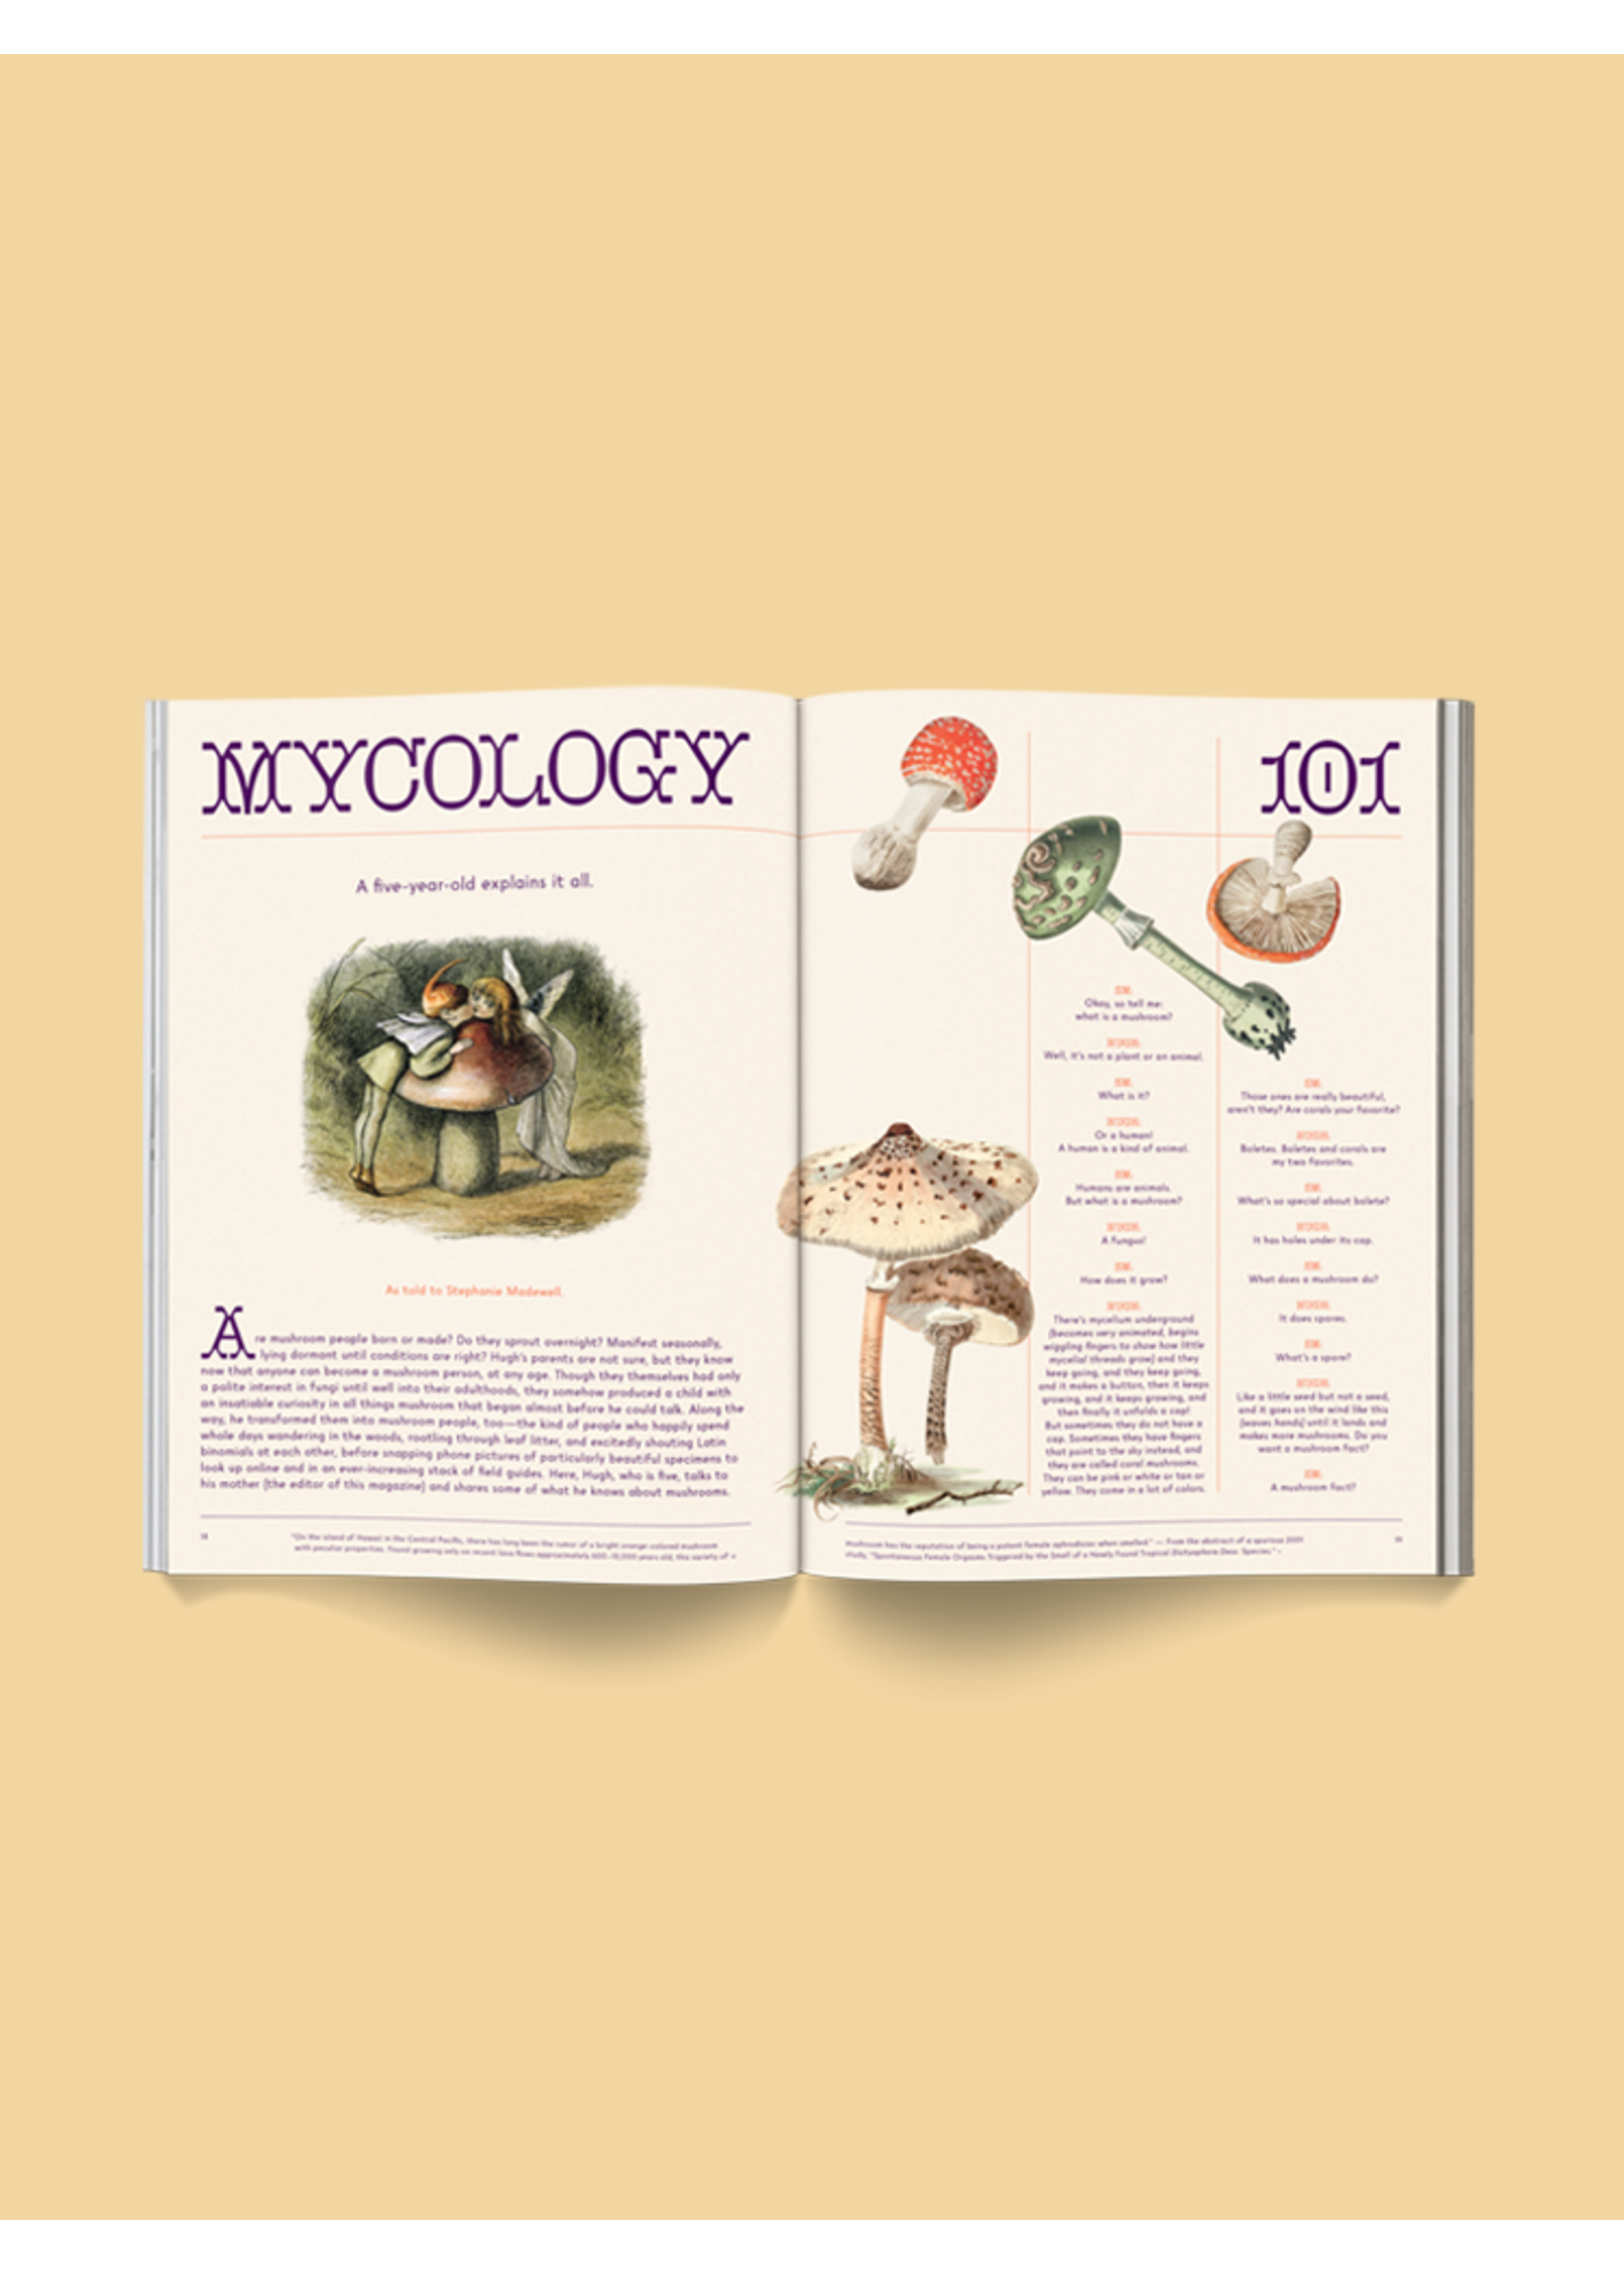 Broccoli "Mushroom People" magazine by Broccoli